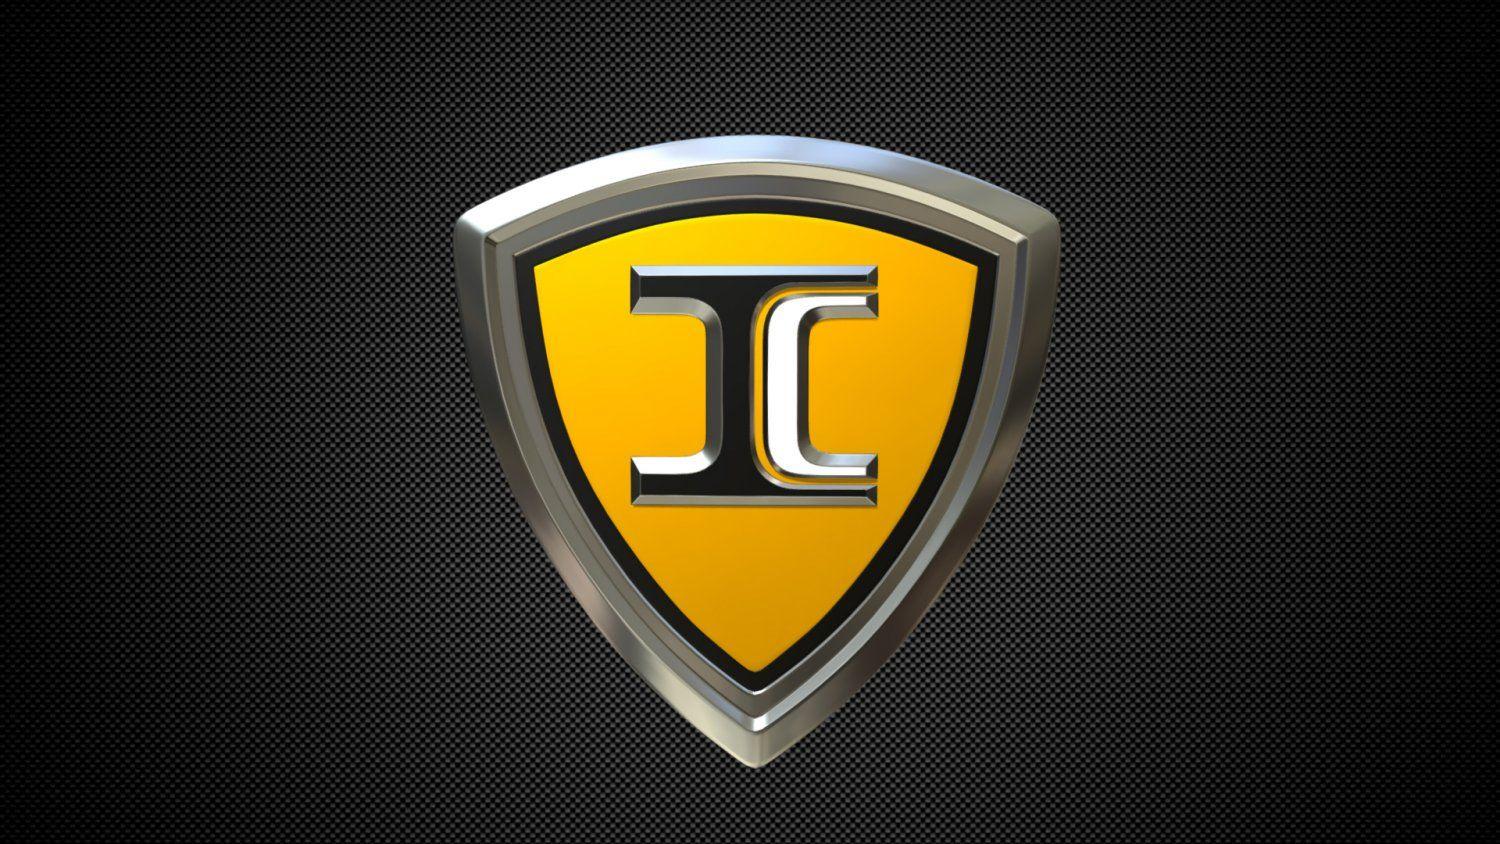 IC Logo - Ic bus logo 3D Model in Parts of auto 3DExport